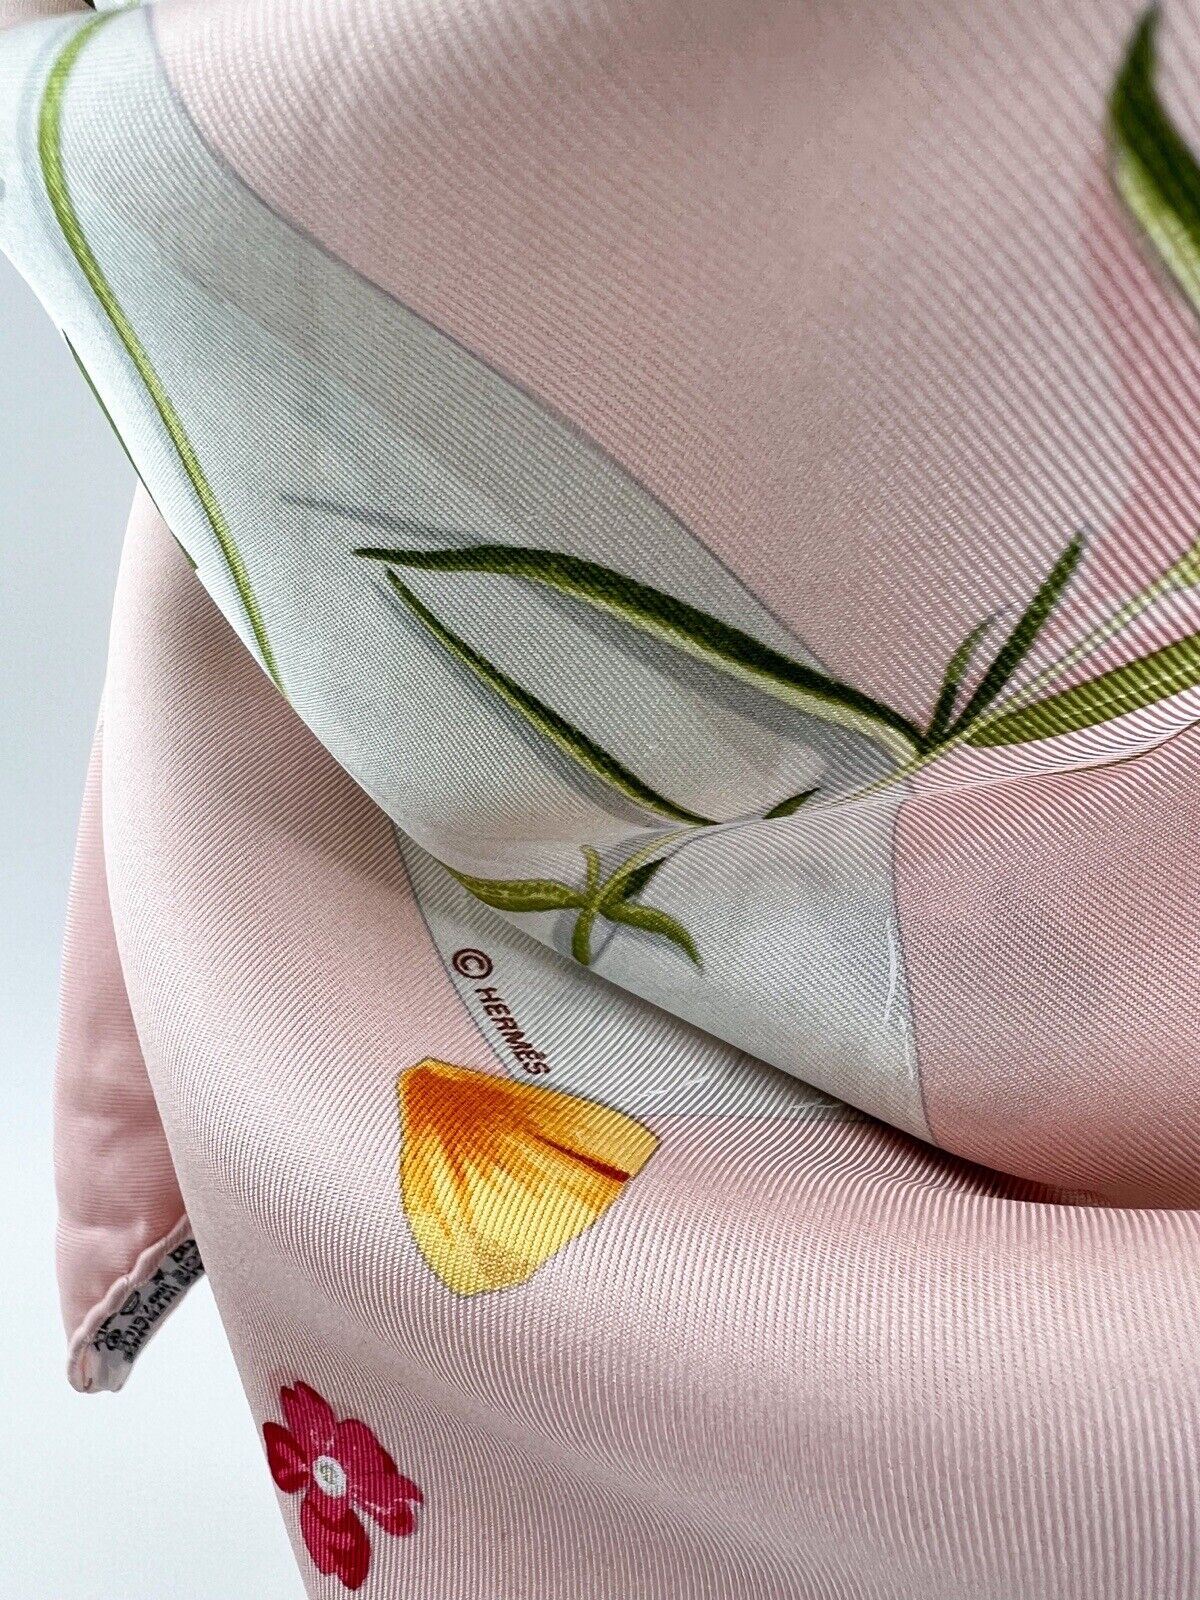 Hermes Silk Pink Scarf Wrap “Des Fleurs pour de Dire” Vintage Made in France